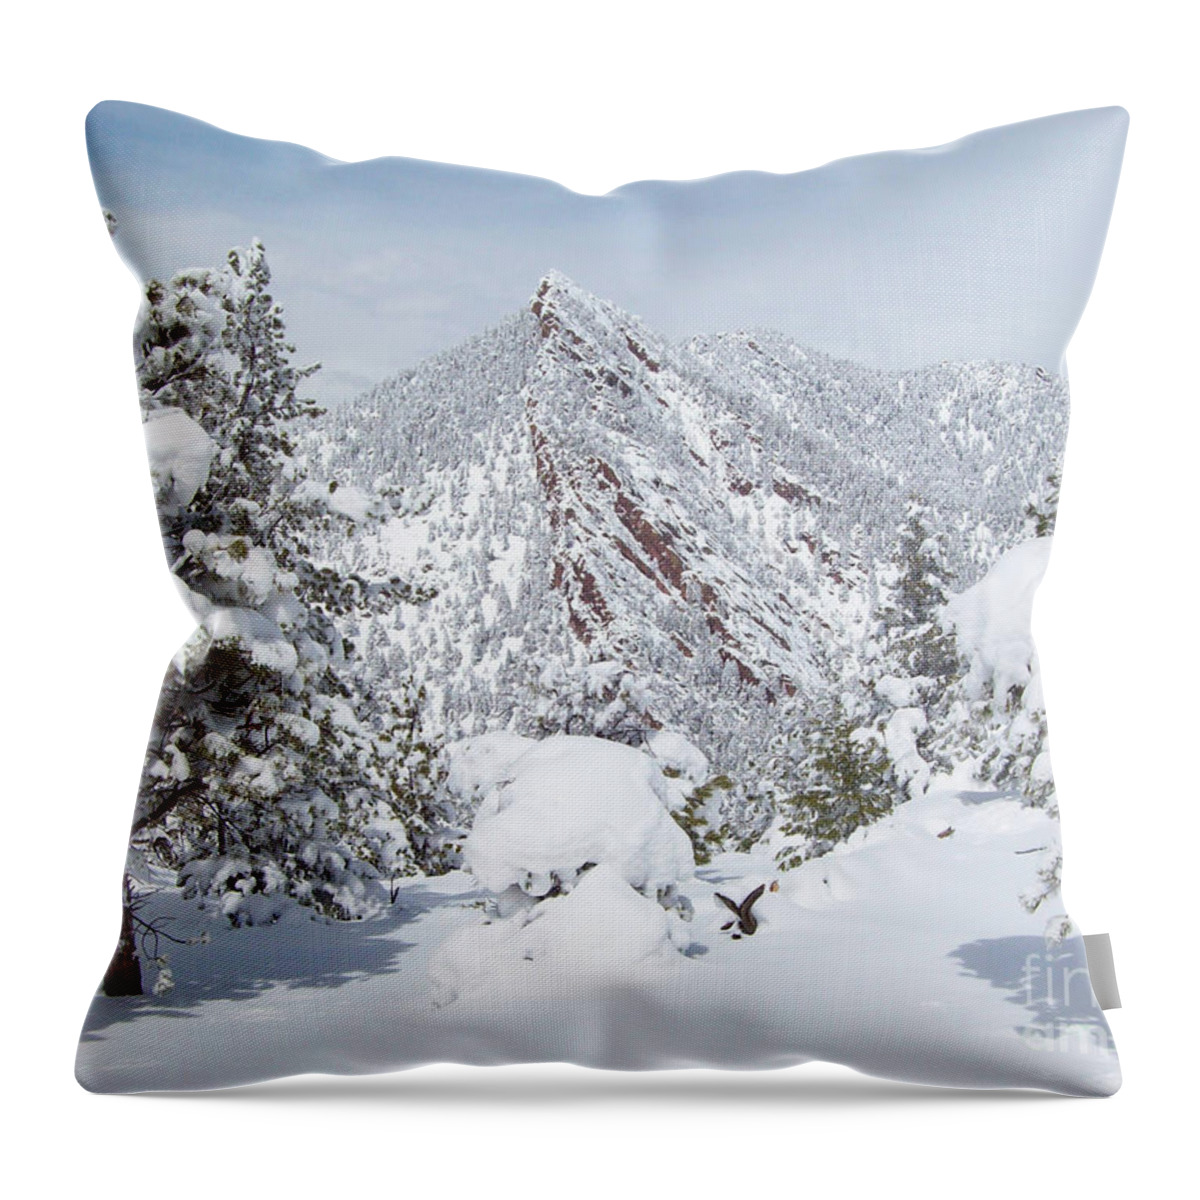 Bear Peak Mountain Throw Pillow featuring the photograph On Top of Bear Peak Snow Mountain by Daniel Larsen